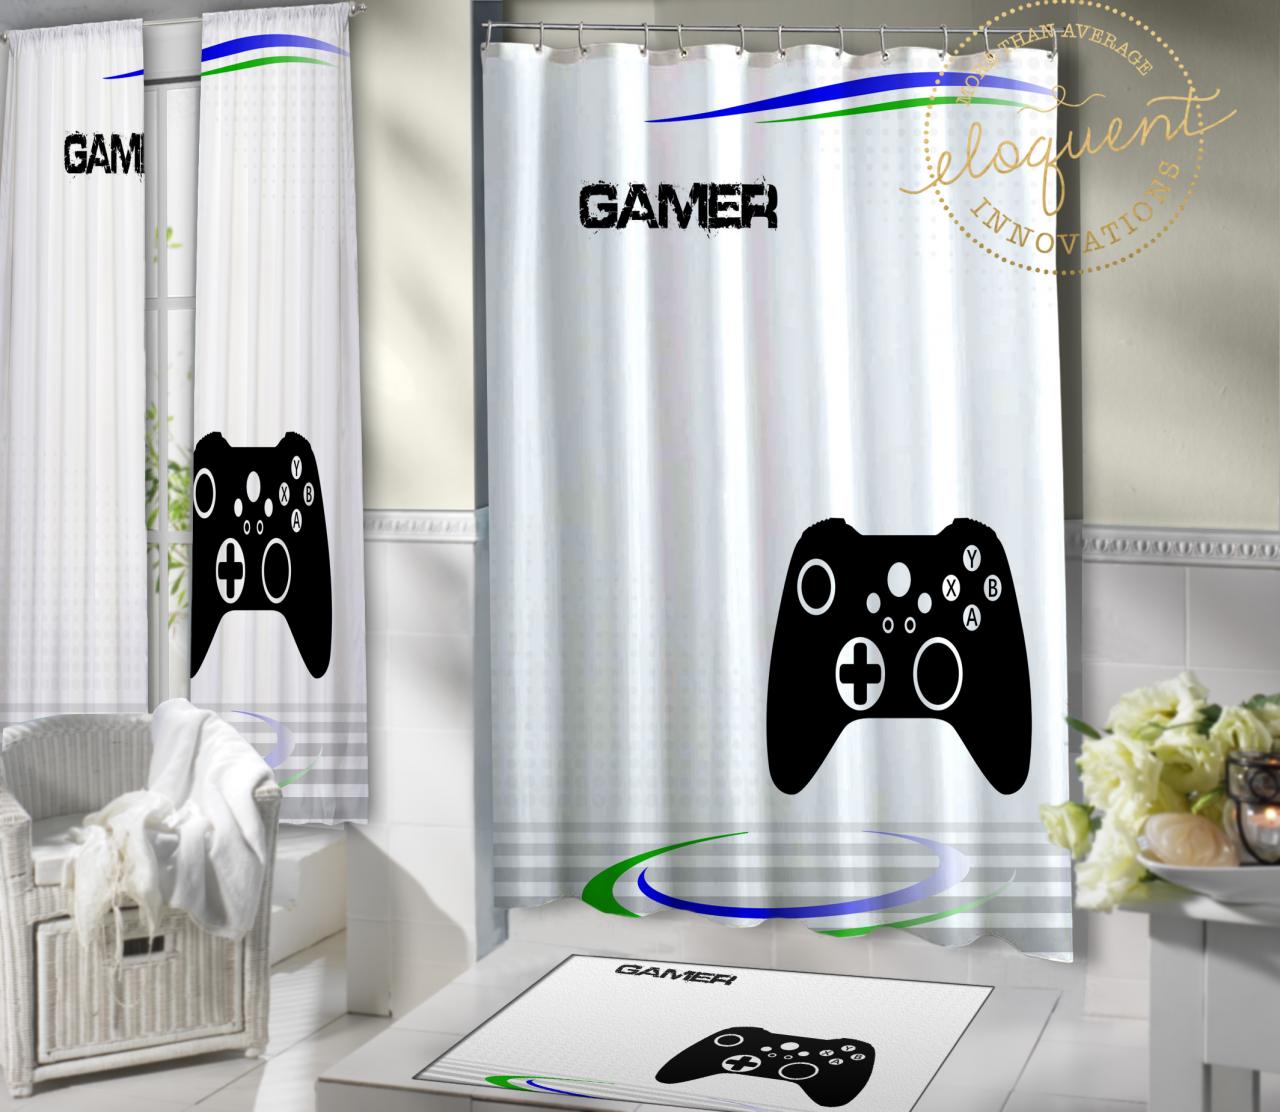 Gamer Bathroom Decor, Gaming, Bathroom Curtains, Video Game Art 410